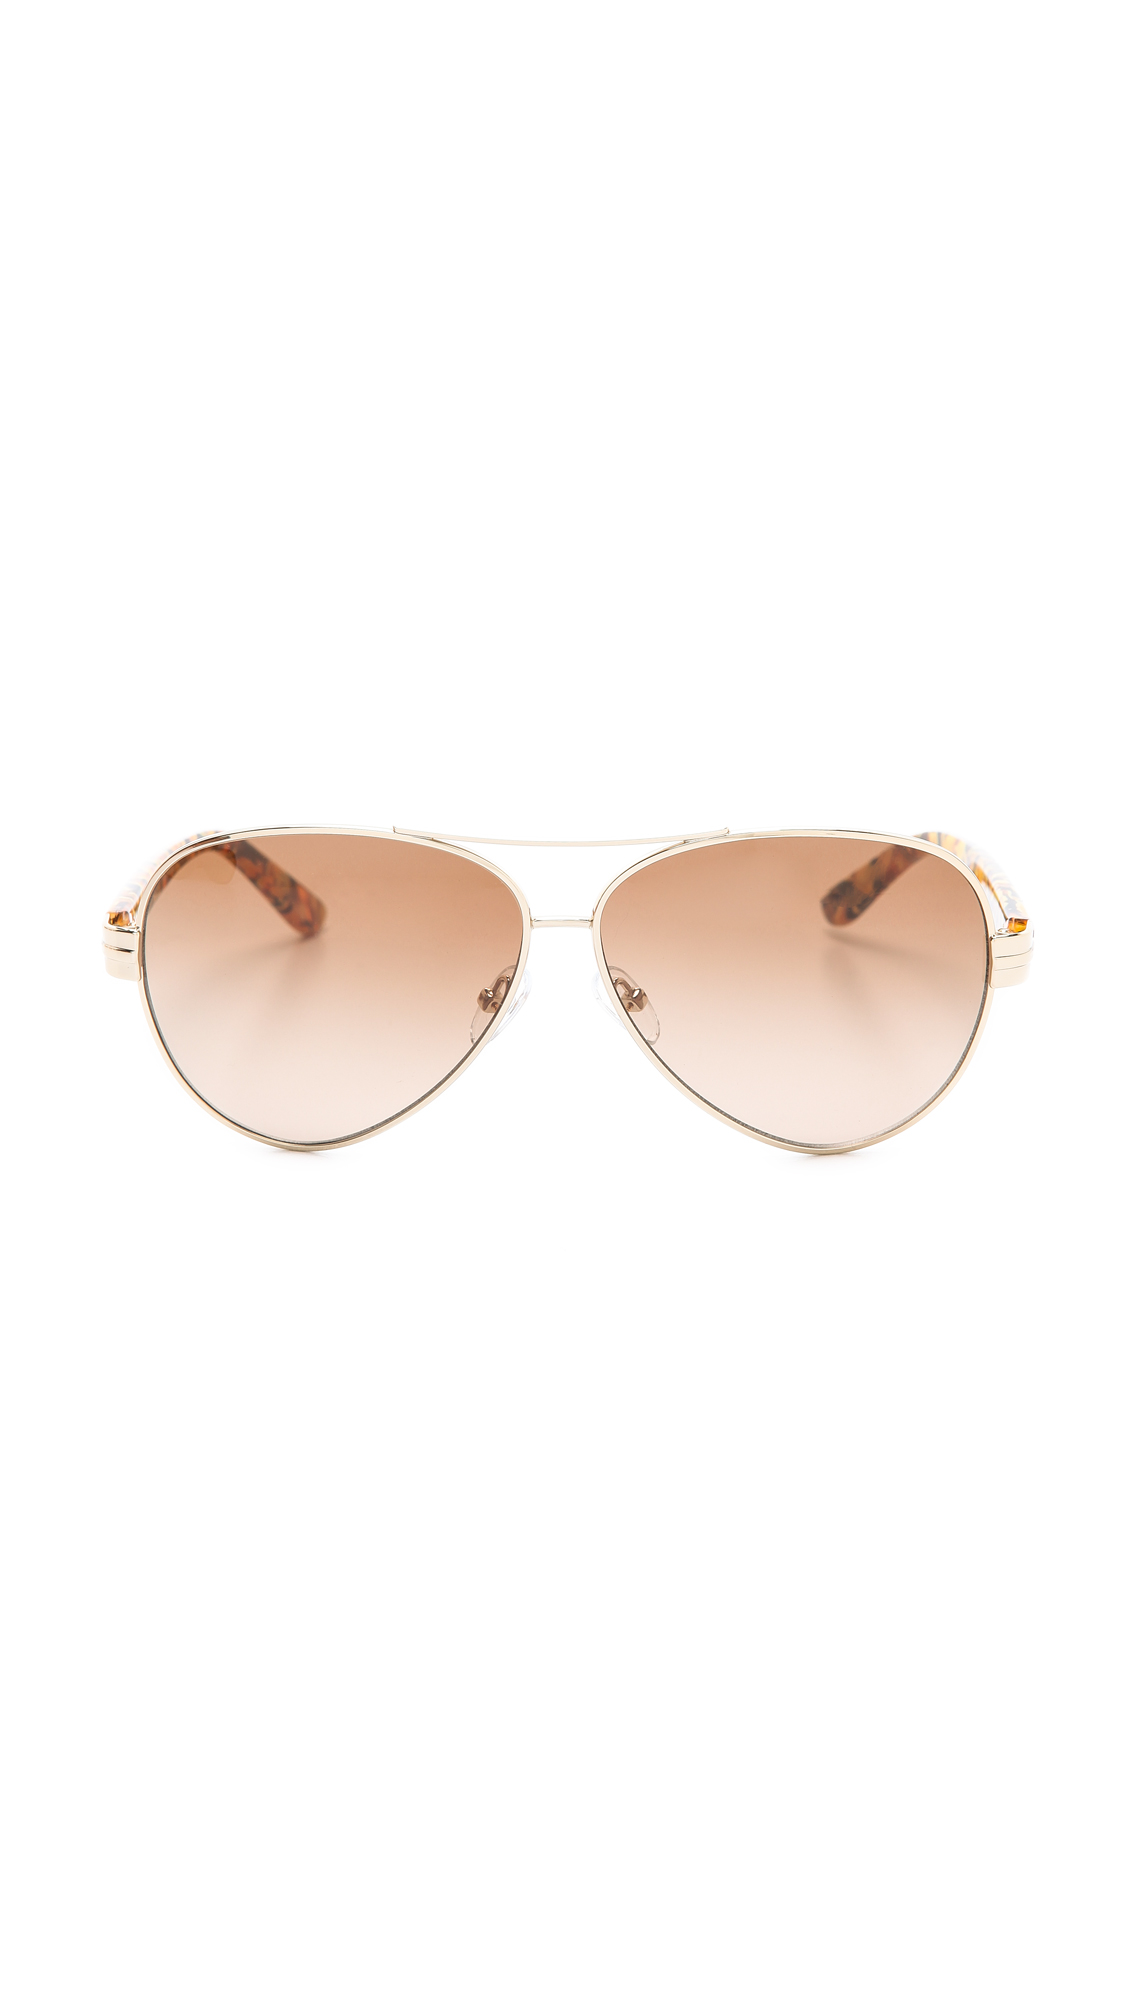 Tory Burch Modern Aviator Sunglasses in Brown | Lyst